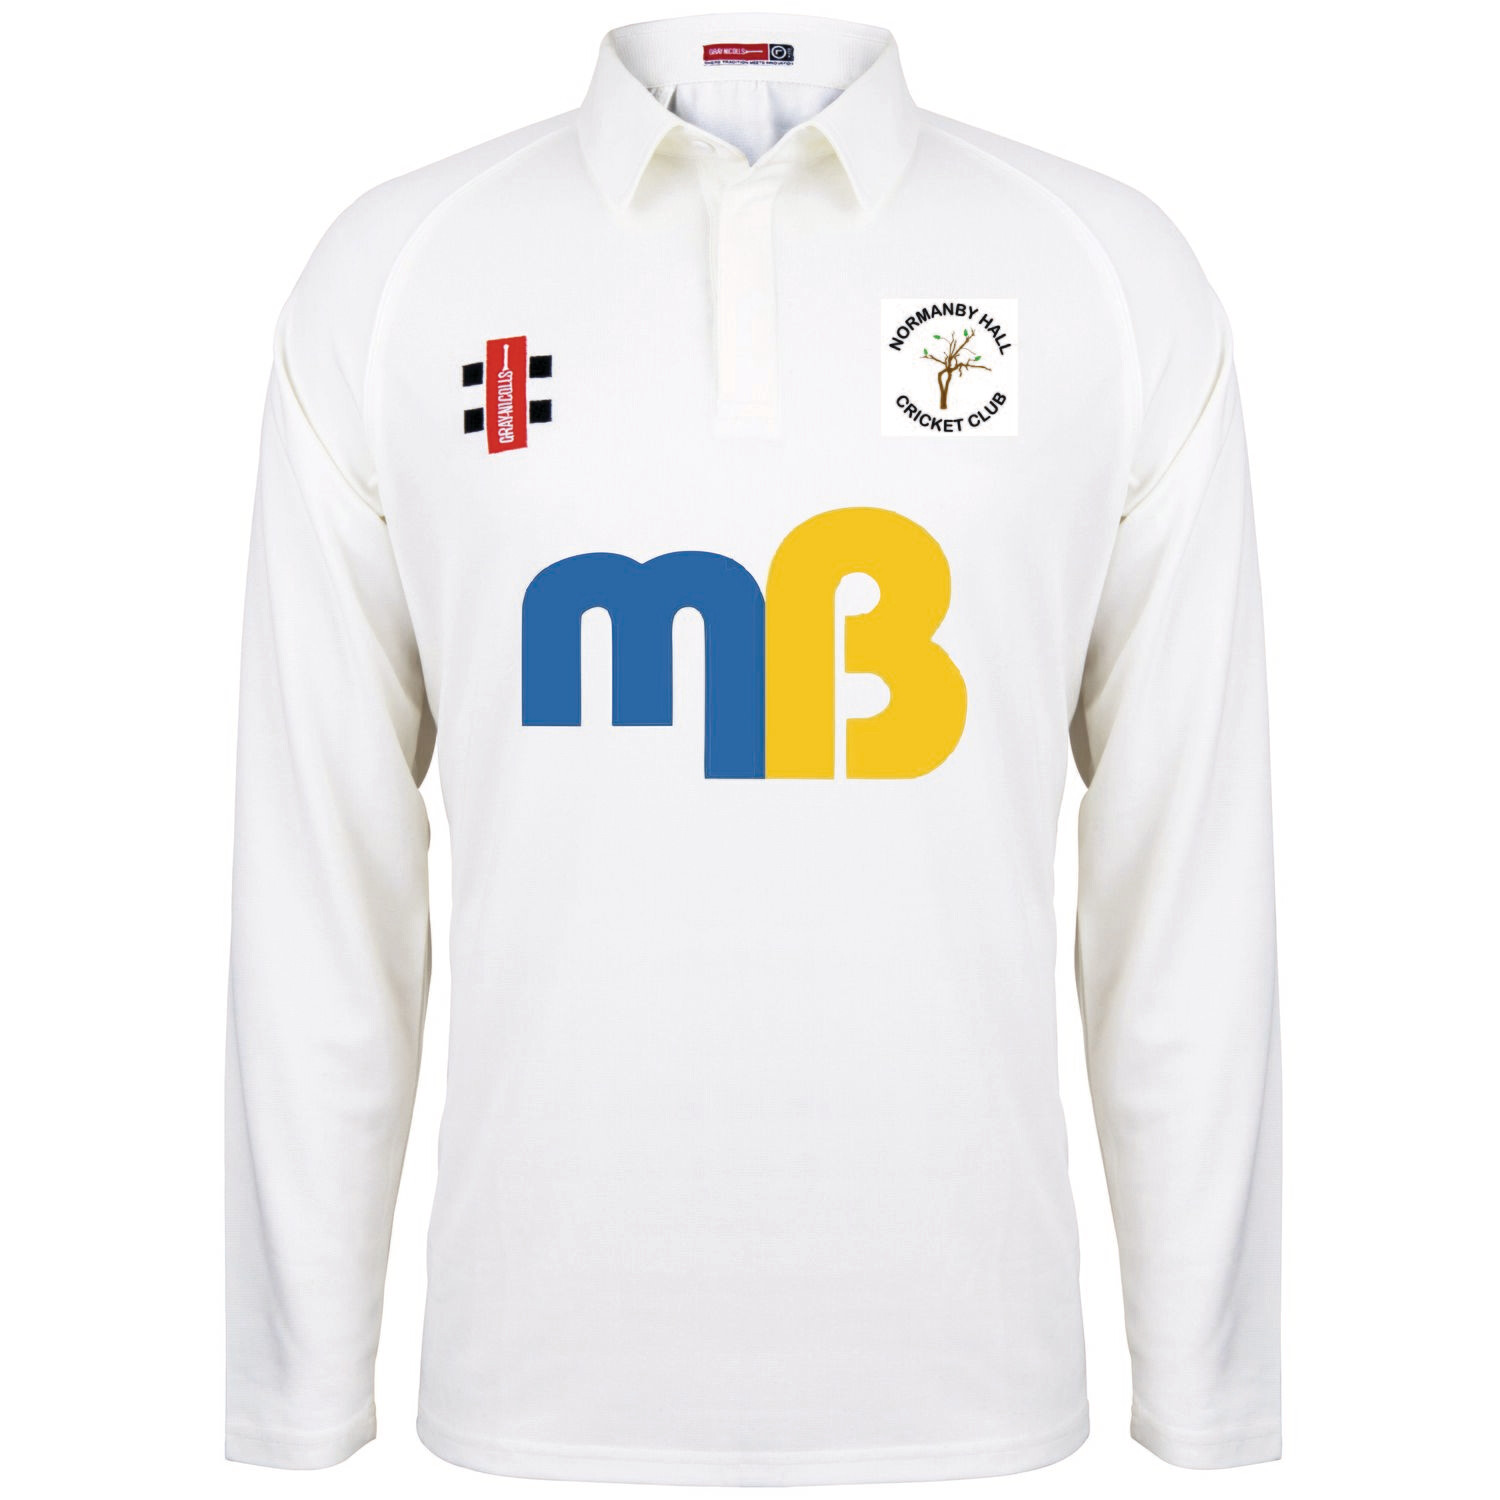 Normanby Hall Matrix V2 Long Sleeve Cricket Shirt